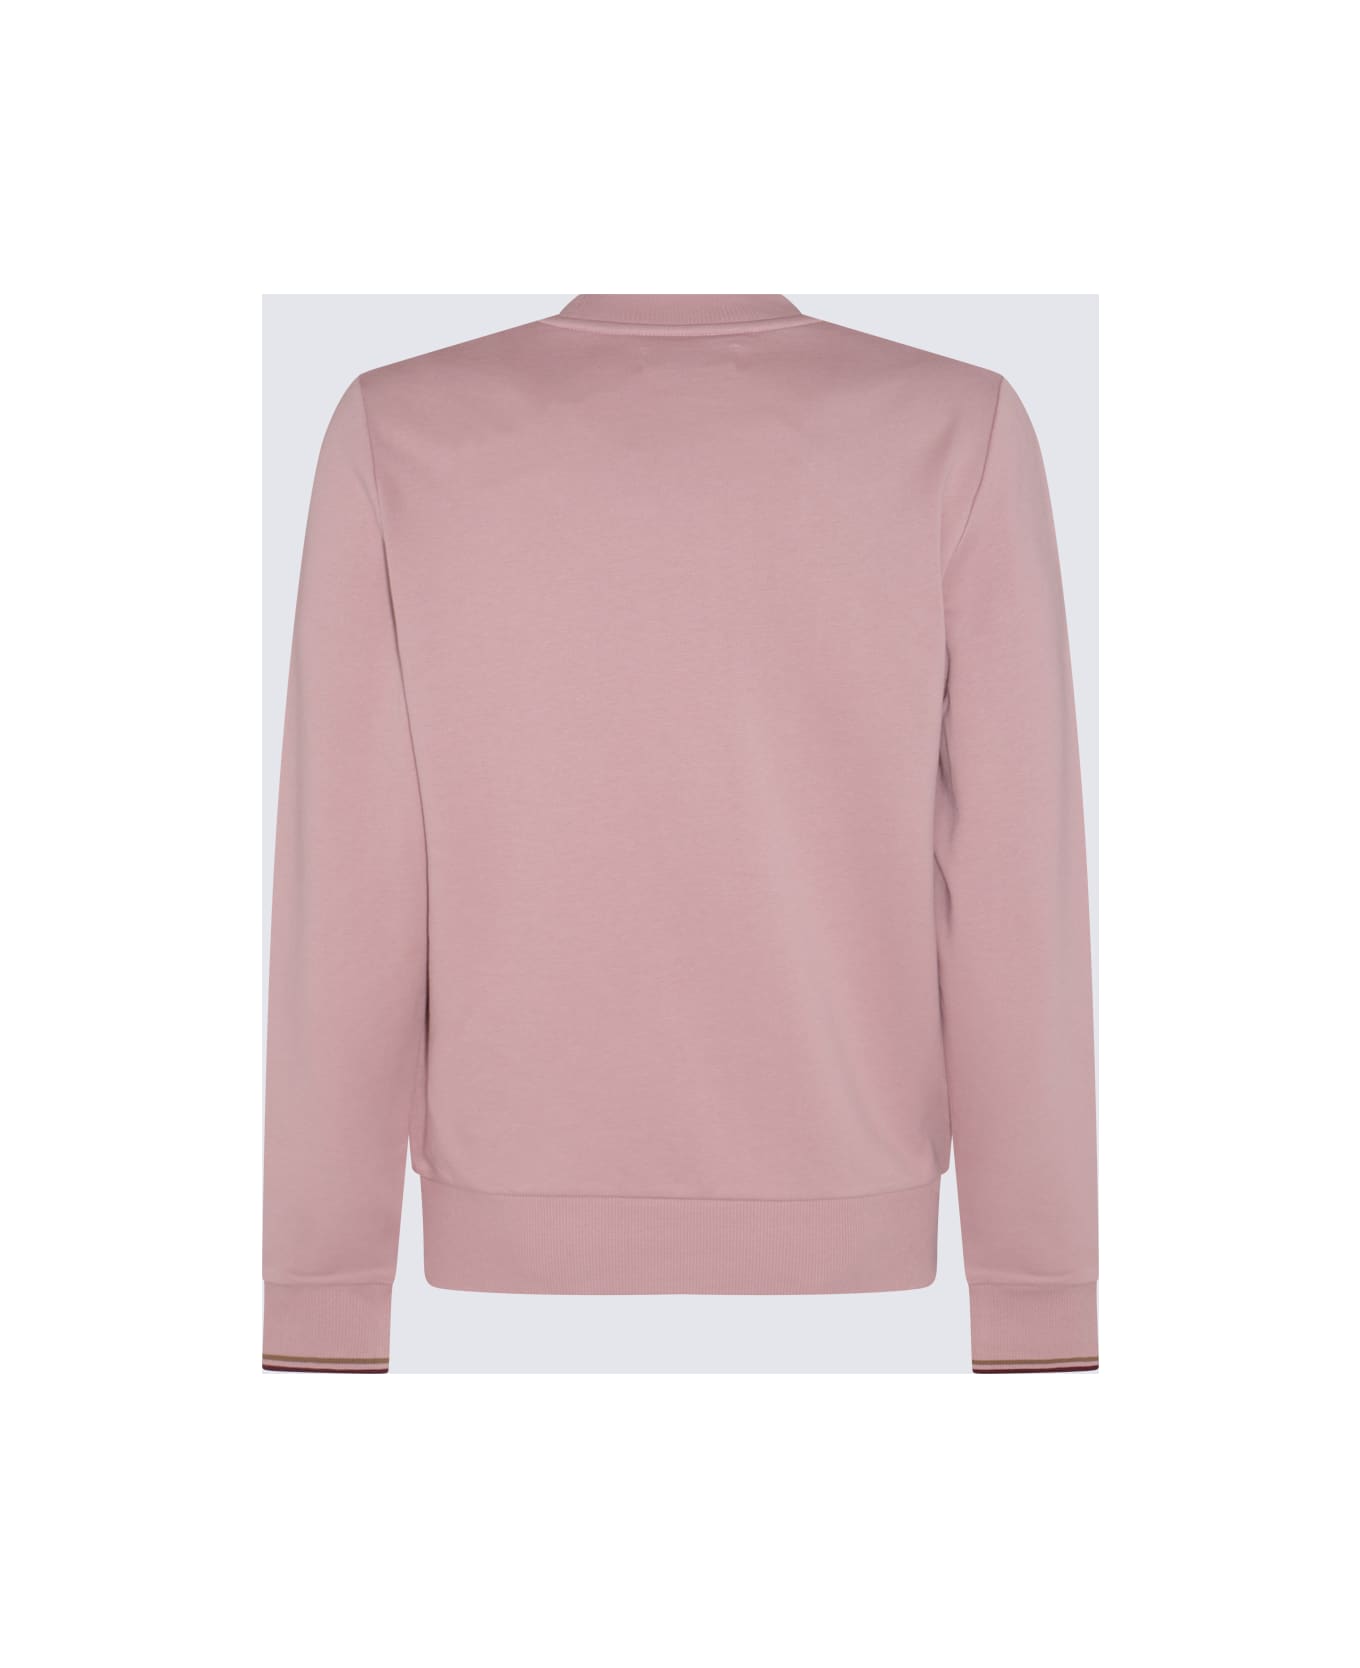 Fred Perry Dusty Pink Cotton Blend Sweatshirt - DUSTy pink フリース